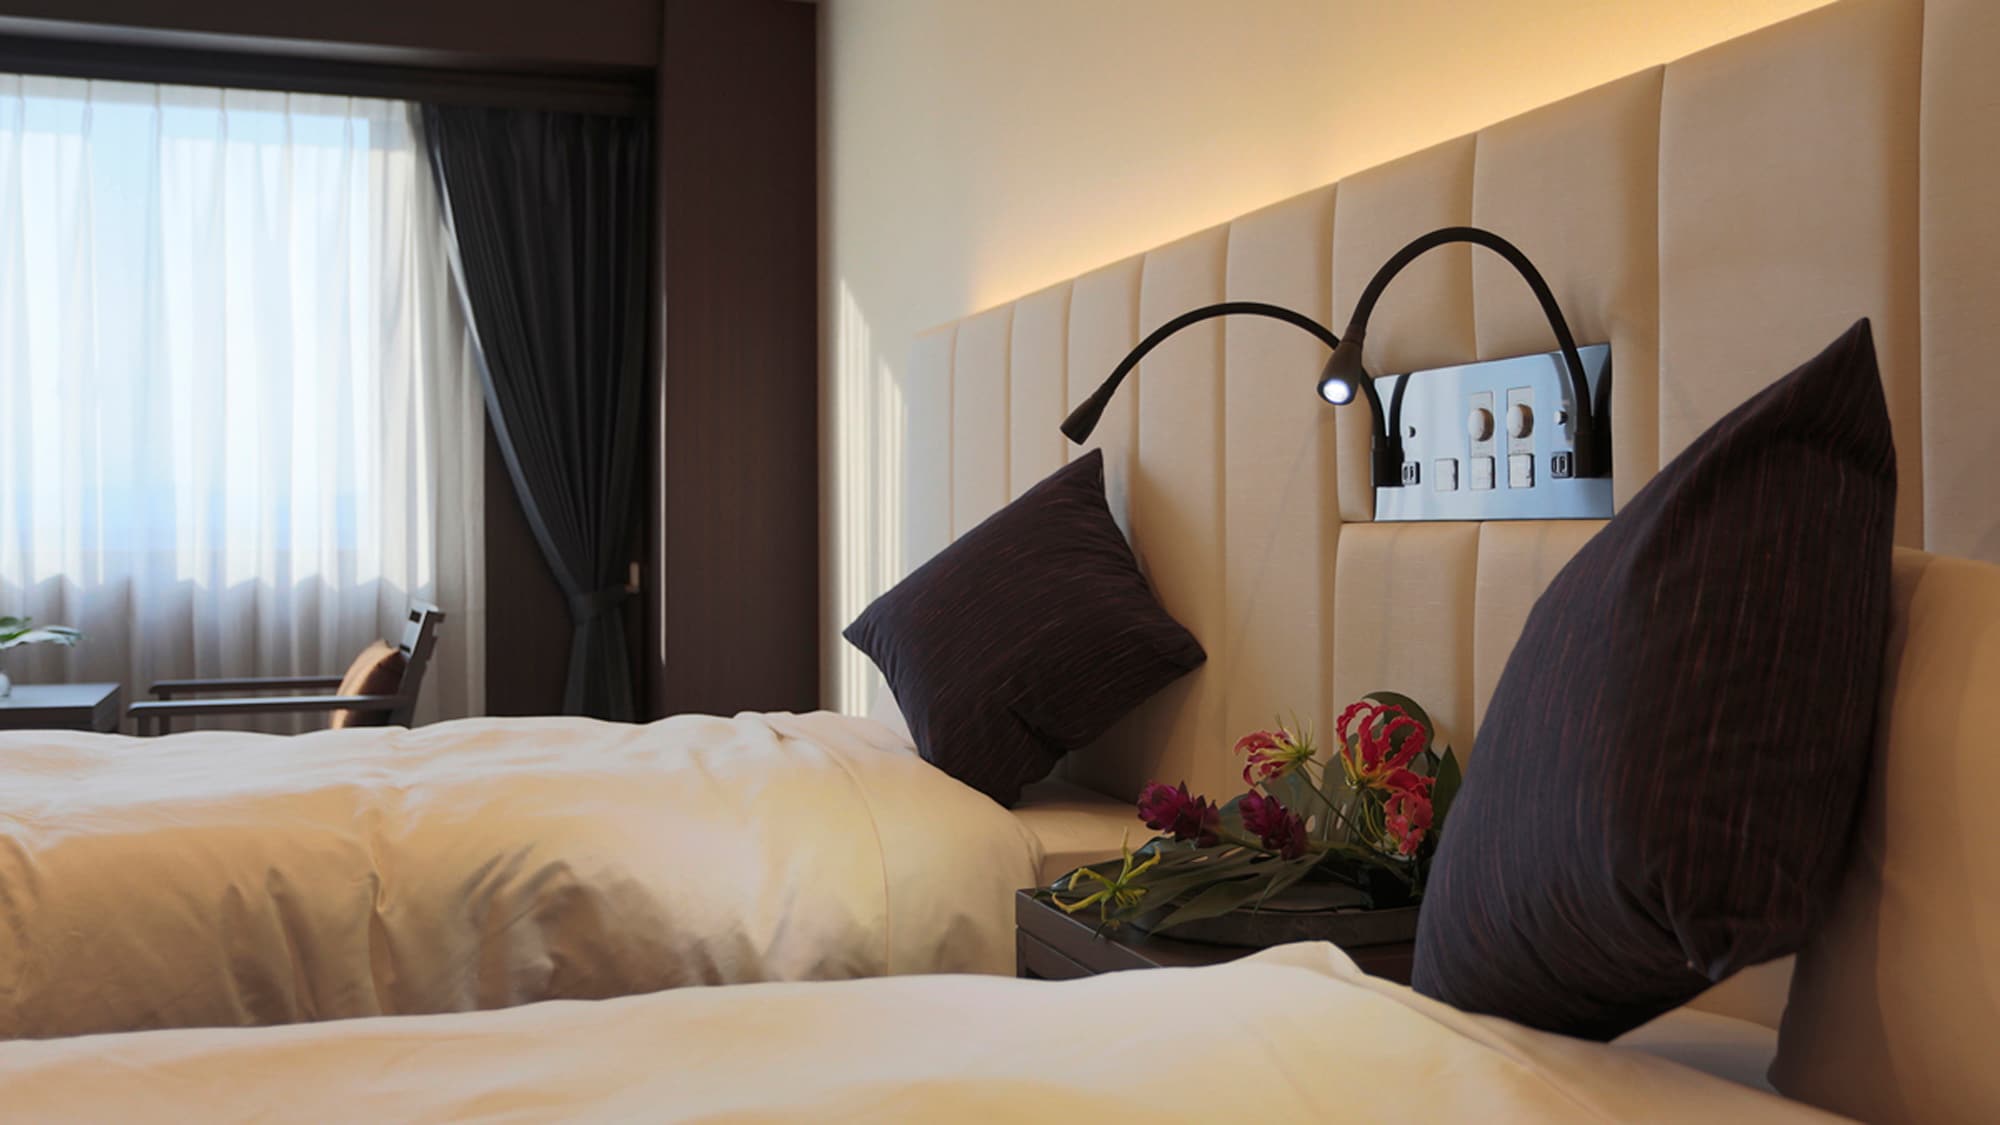 [11F Grande Room] 4 tempat tidur dapat dijajarkan dengan menggunakan 2 tempat tidur susun. Co-sleeping ketenangan pikiran (untuk 4 orang)